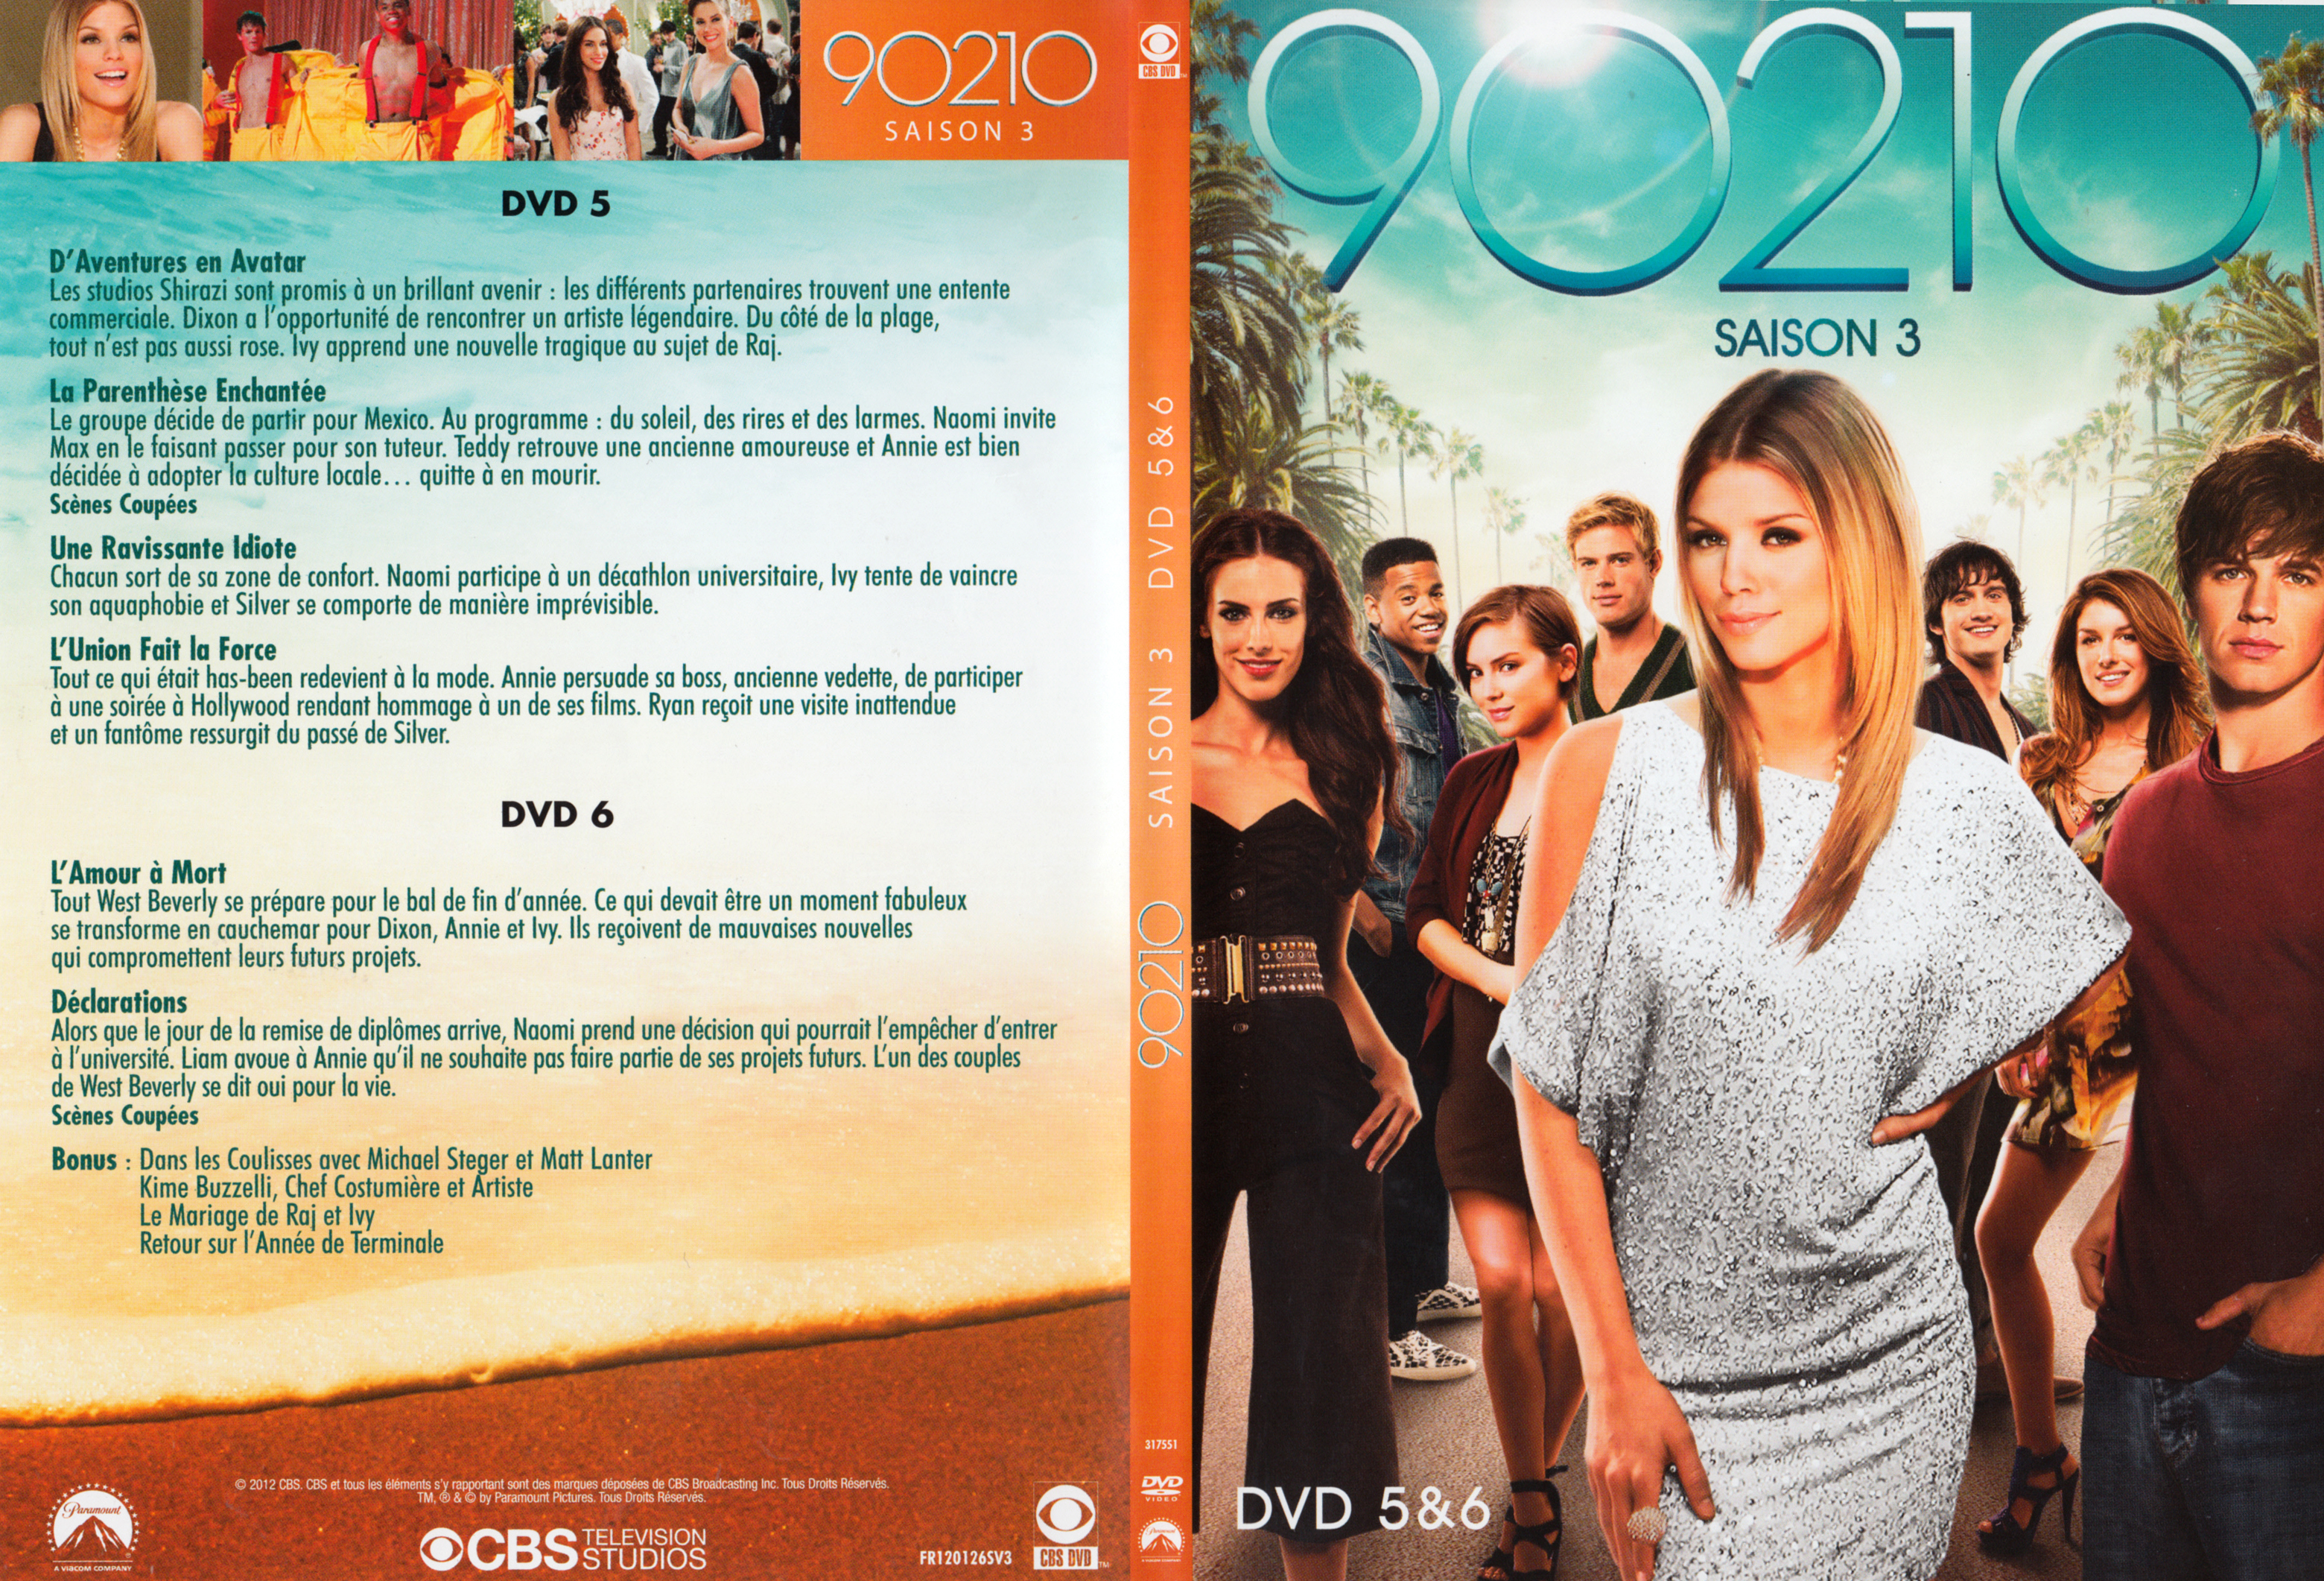 Jaquette DVD 90210 Saison 3 DVD 3